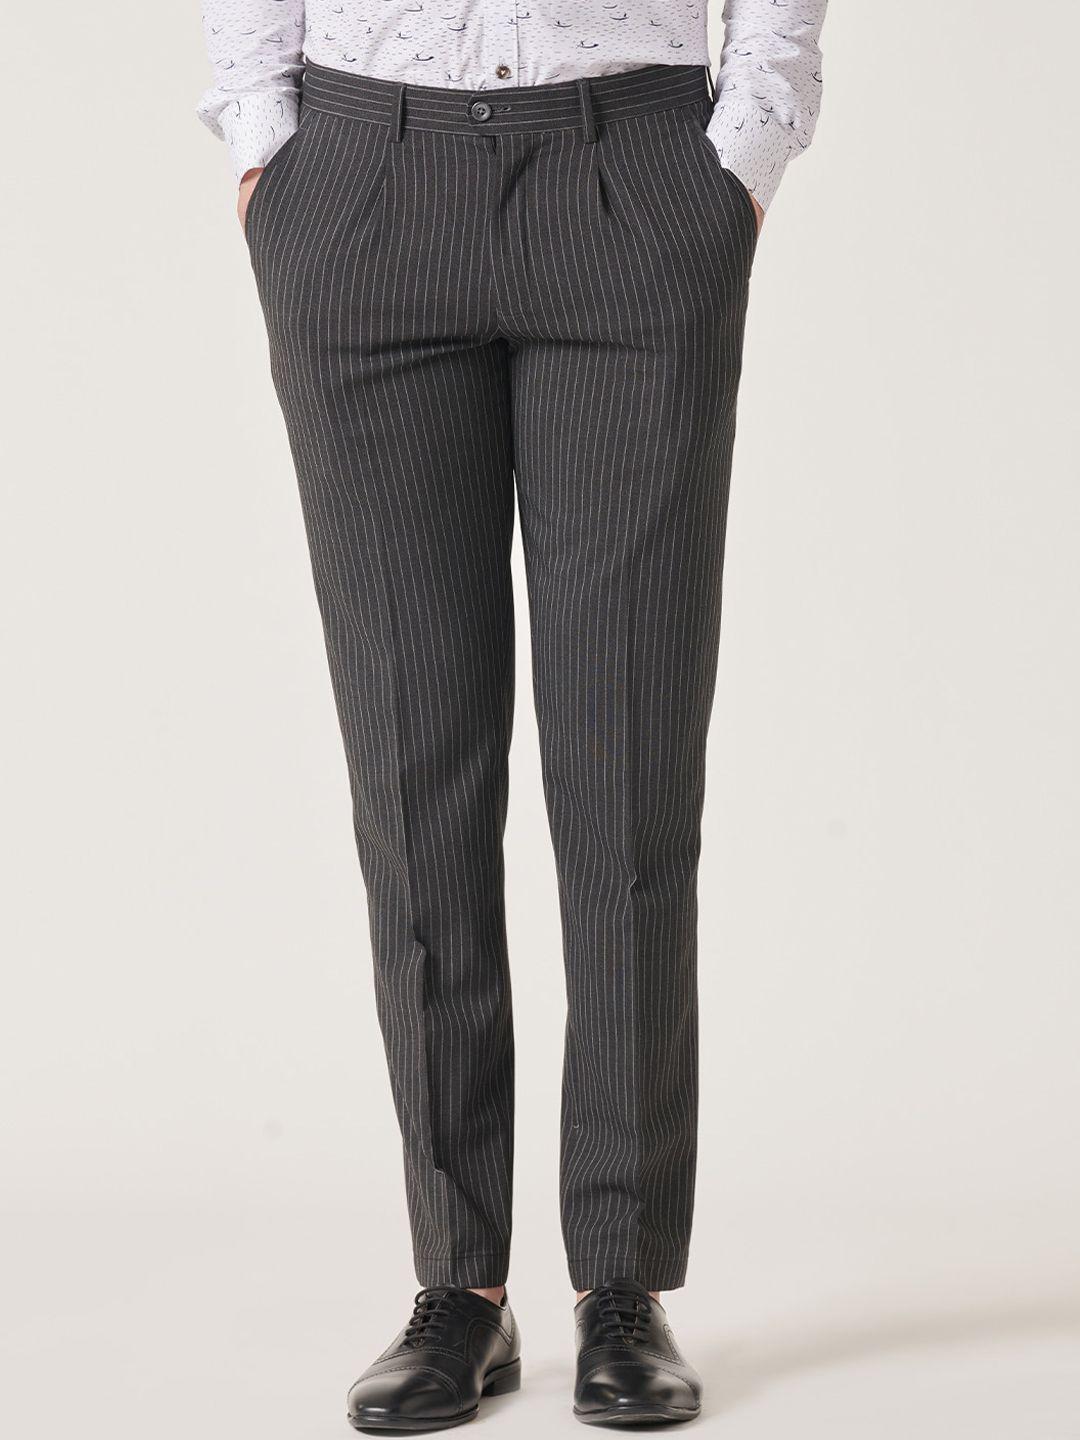 mr-button-men-striped-mid-rise-plain-slim-fit-pleated-trousers